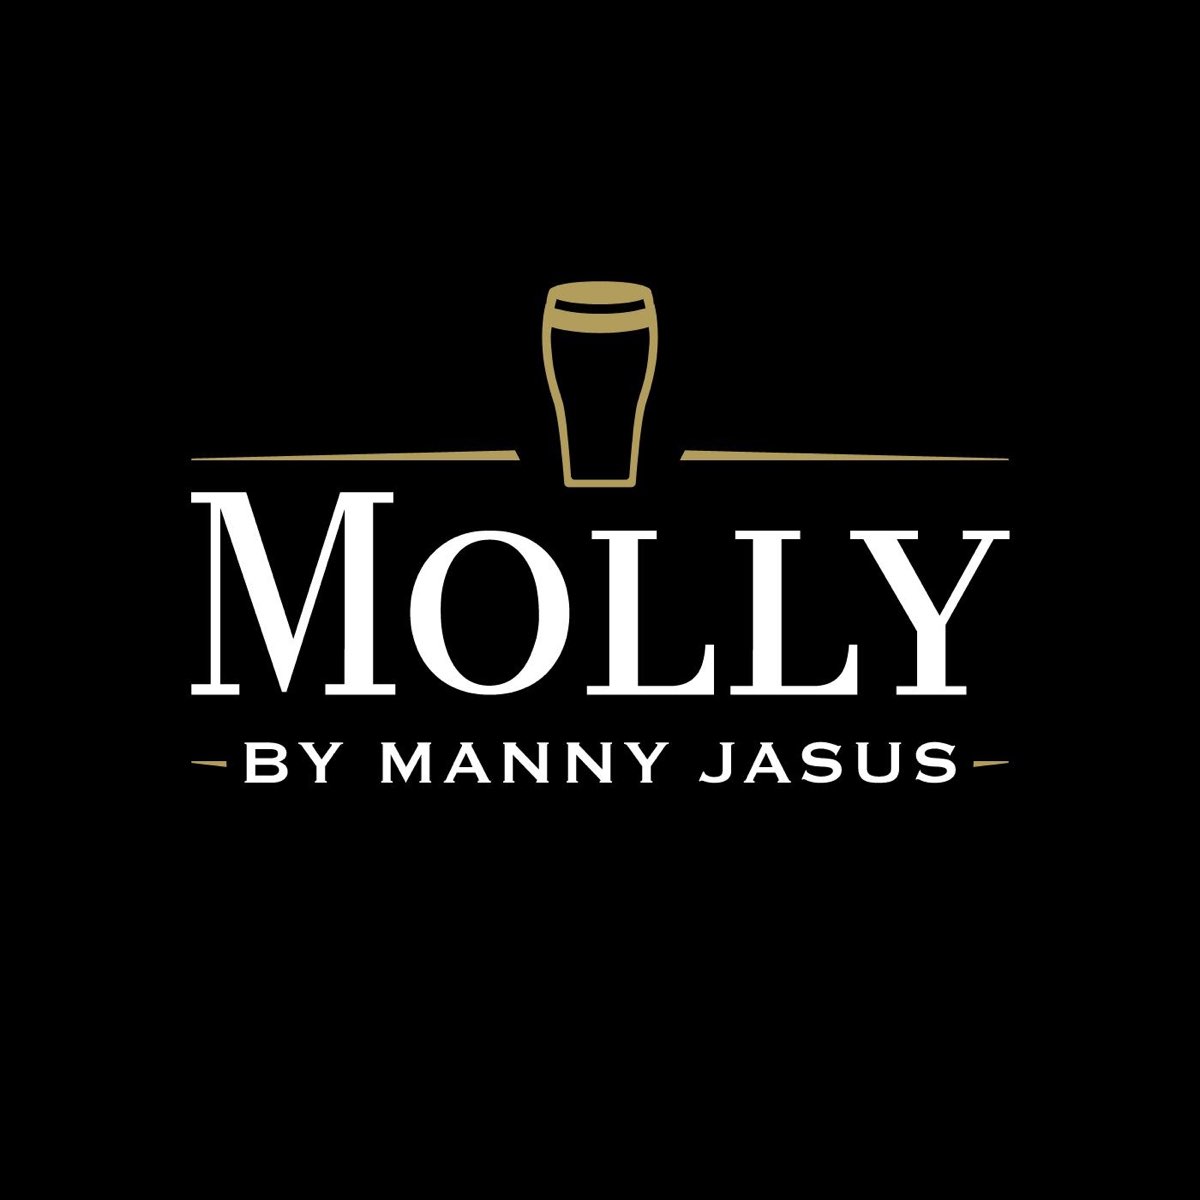 Drink irish. Manny’s Music. Molly. Molly слушать. Mannys Music NY.